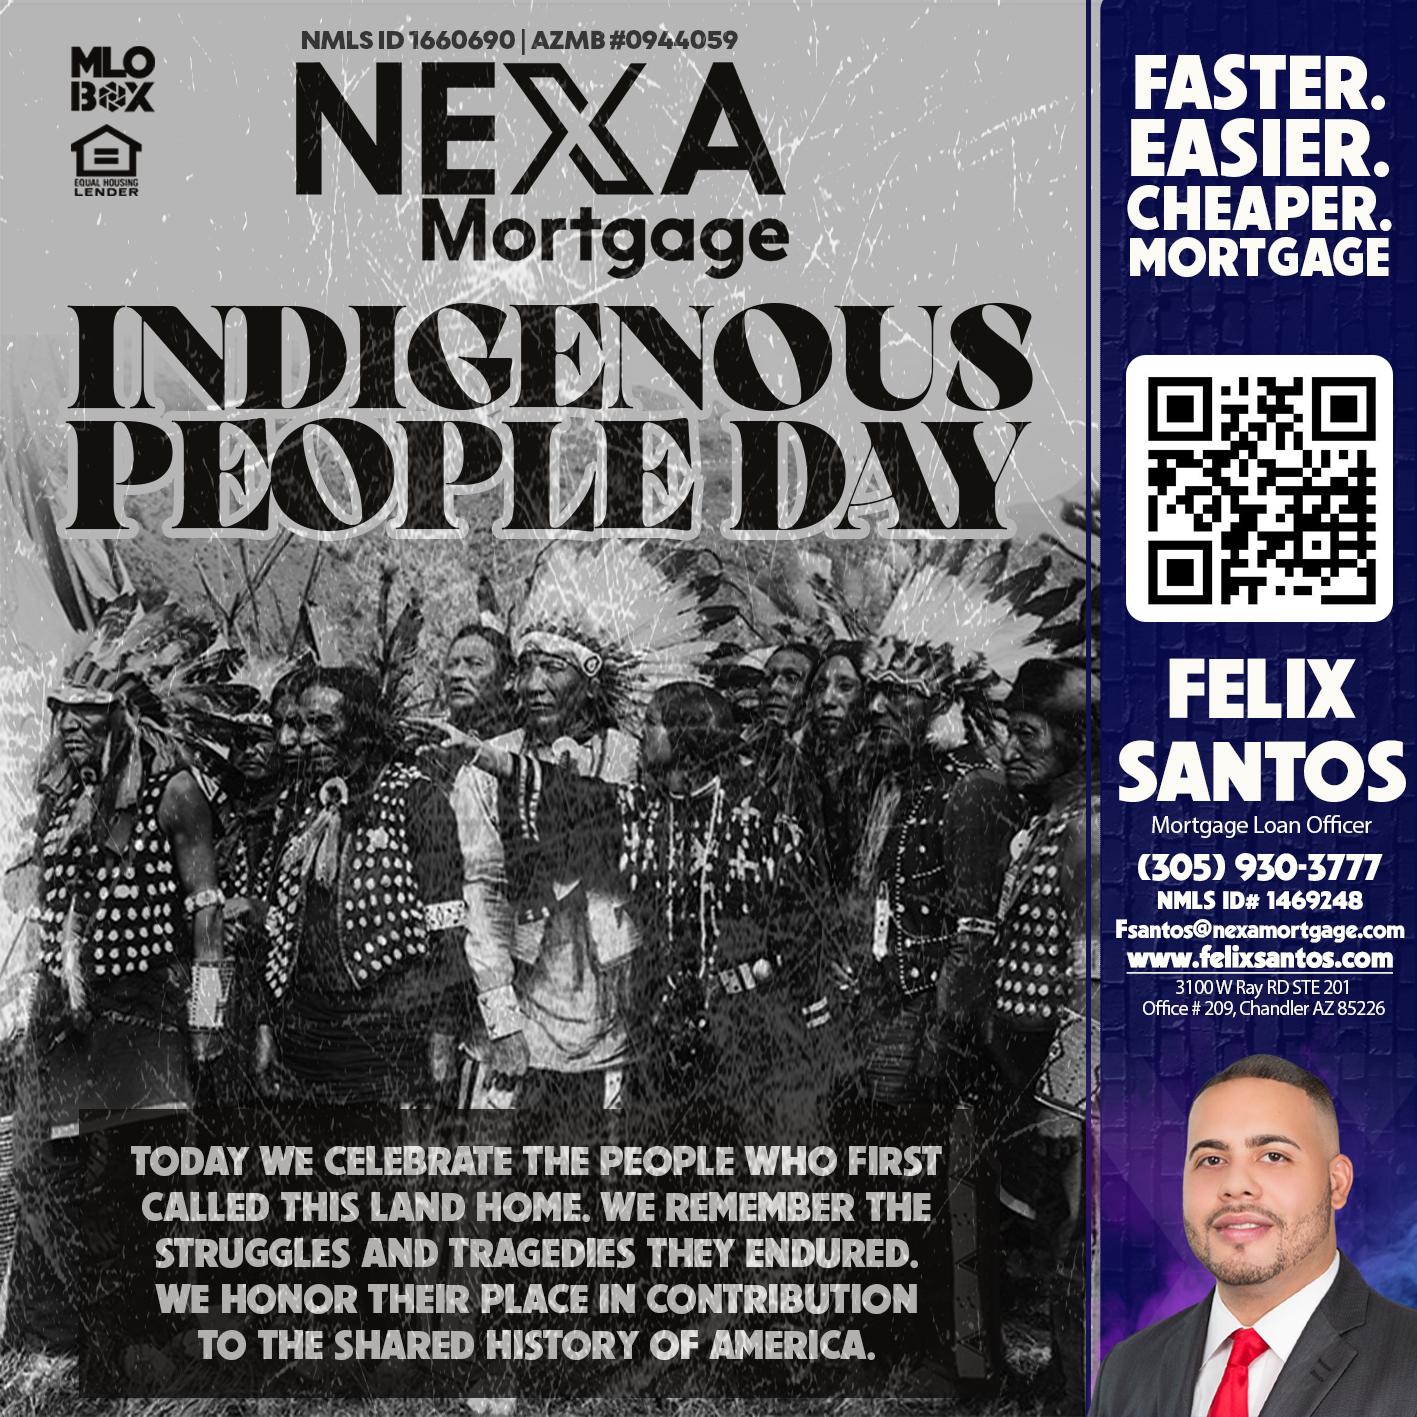 INDIGENOUS PEOPLE DAY - Felix Santos -Mortgage Loan Officer